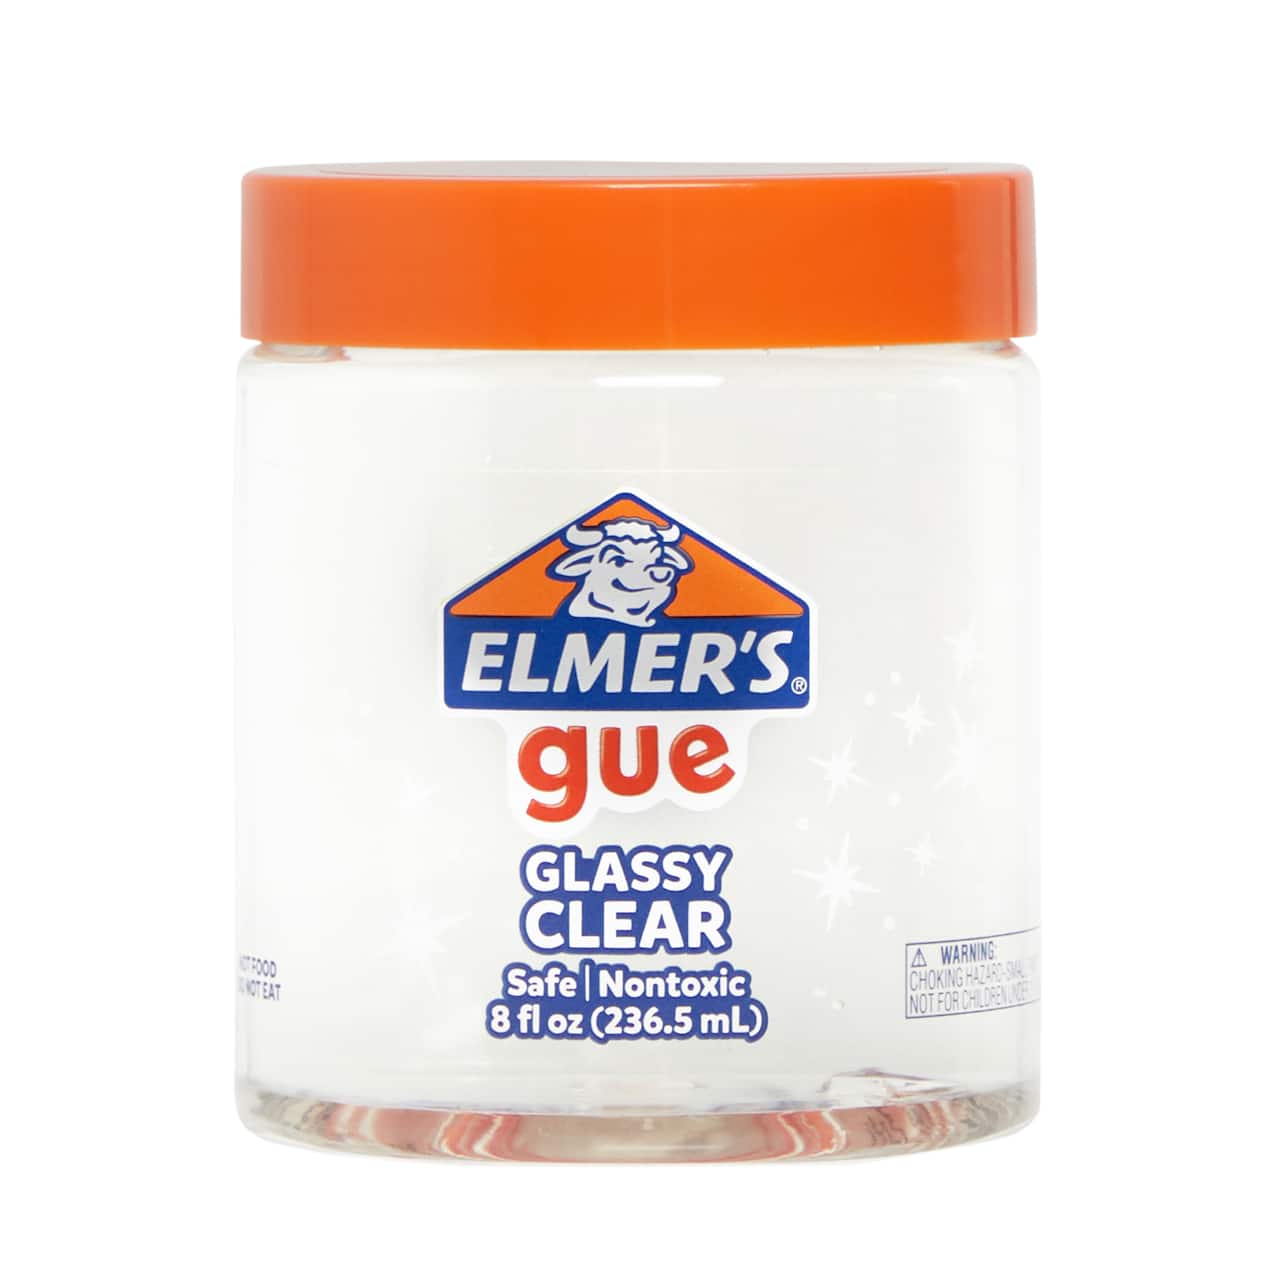 Elmer's® Gue Glassy Clear Premade Slime